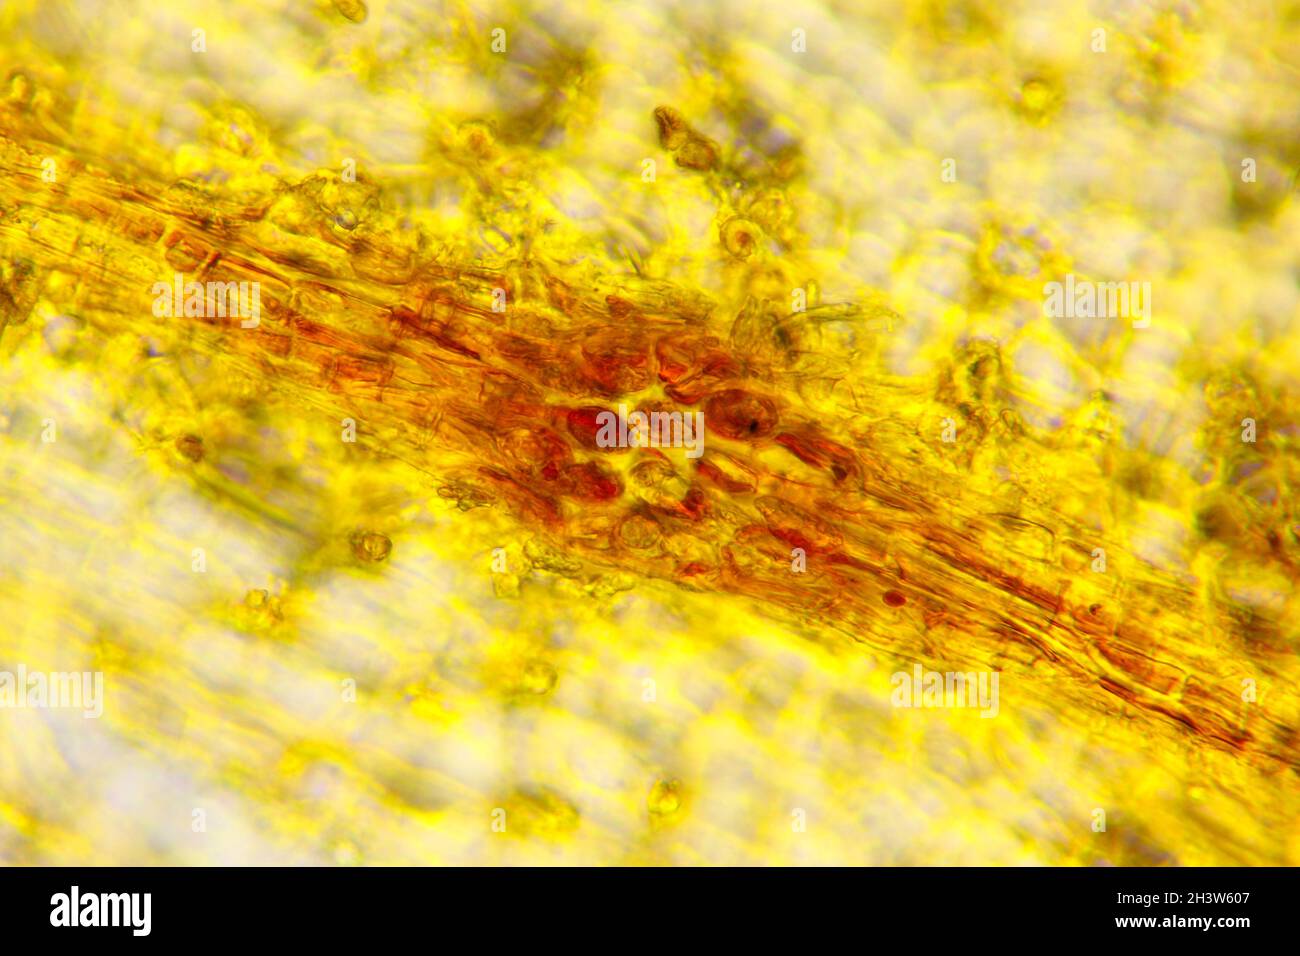 Microscopic view of Common hazel (Corylus avellana) lenticel (top view). Transmitted light. Brightfield illumination. Stock Photo